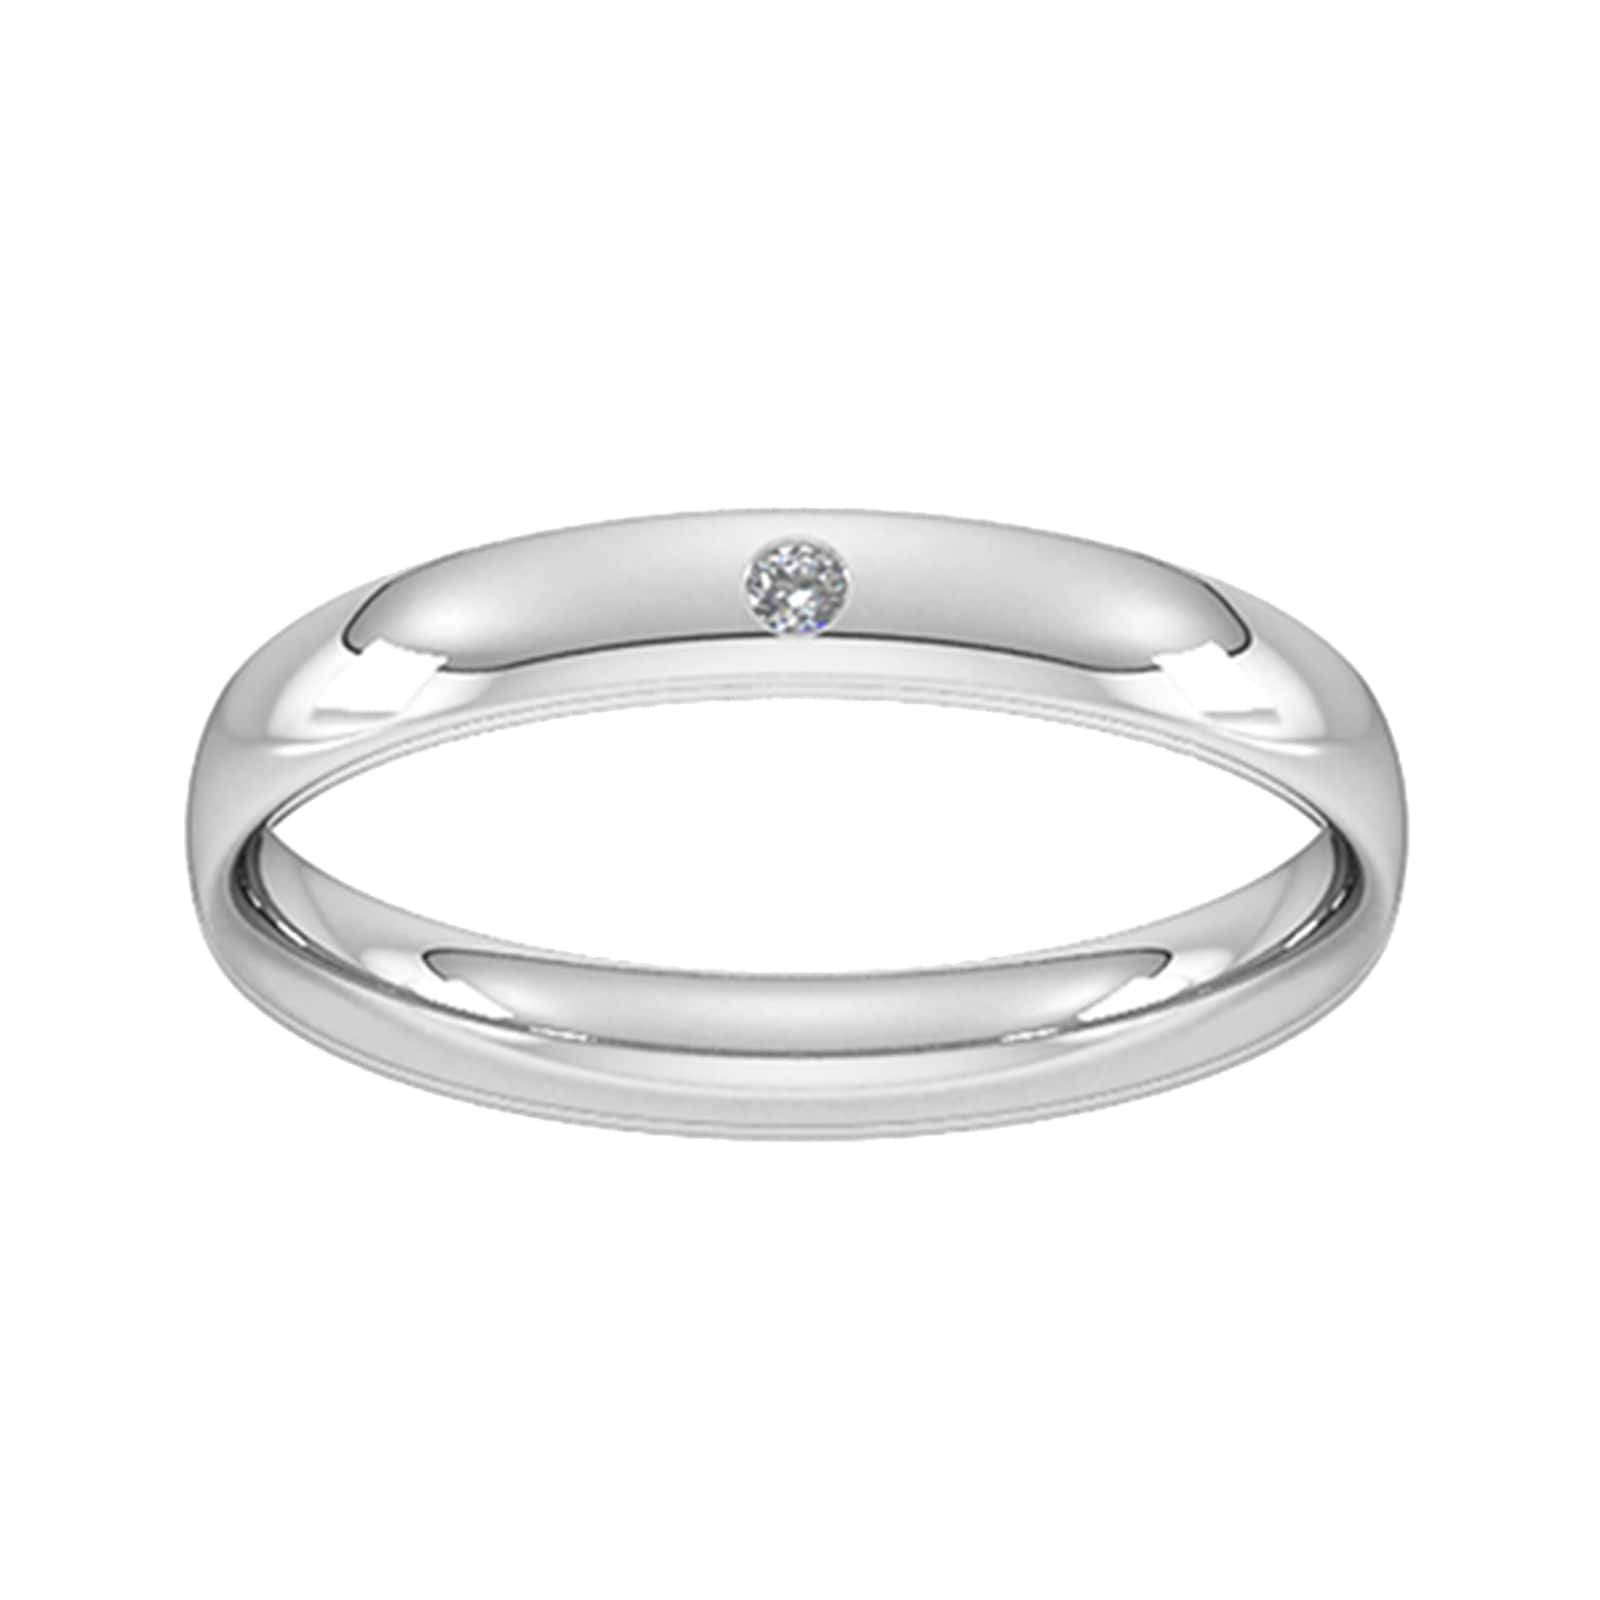 3mm Brilliant Cut Rub Over Diamond Set Wedding Ring In 18 Carat White Gold - Ring Size Z